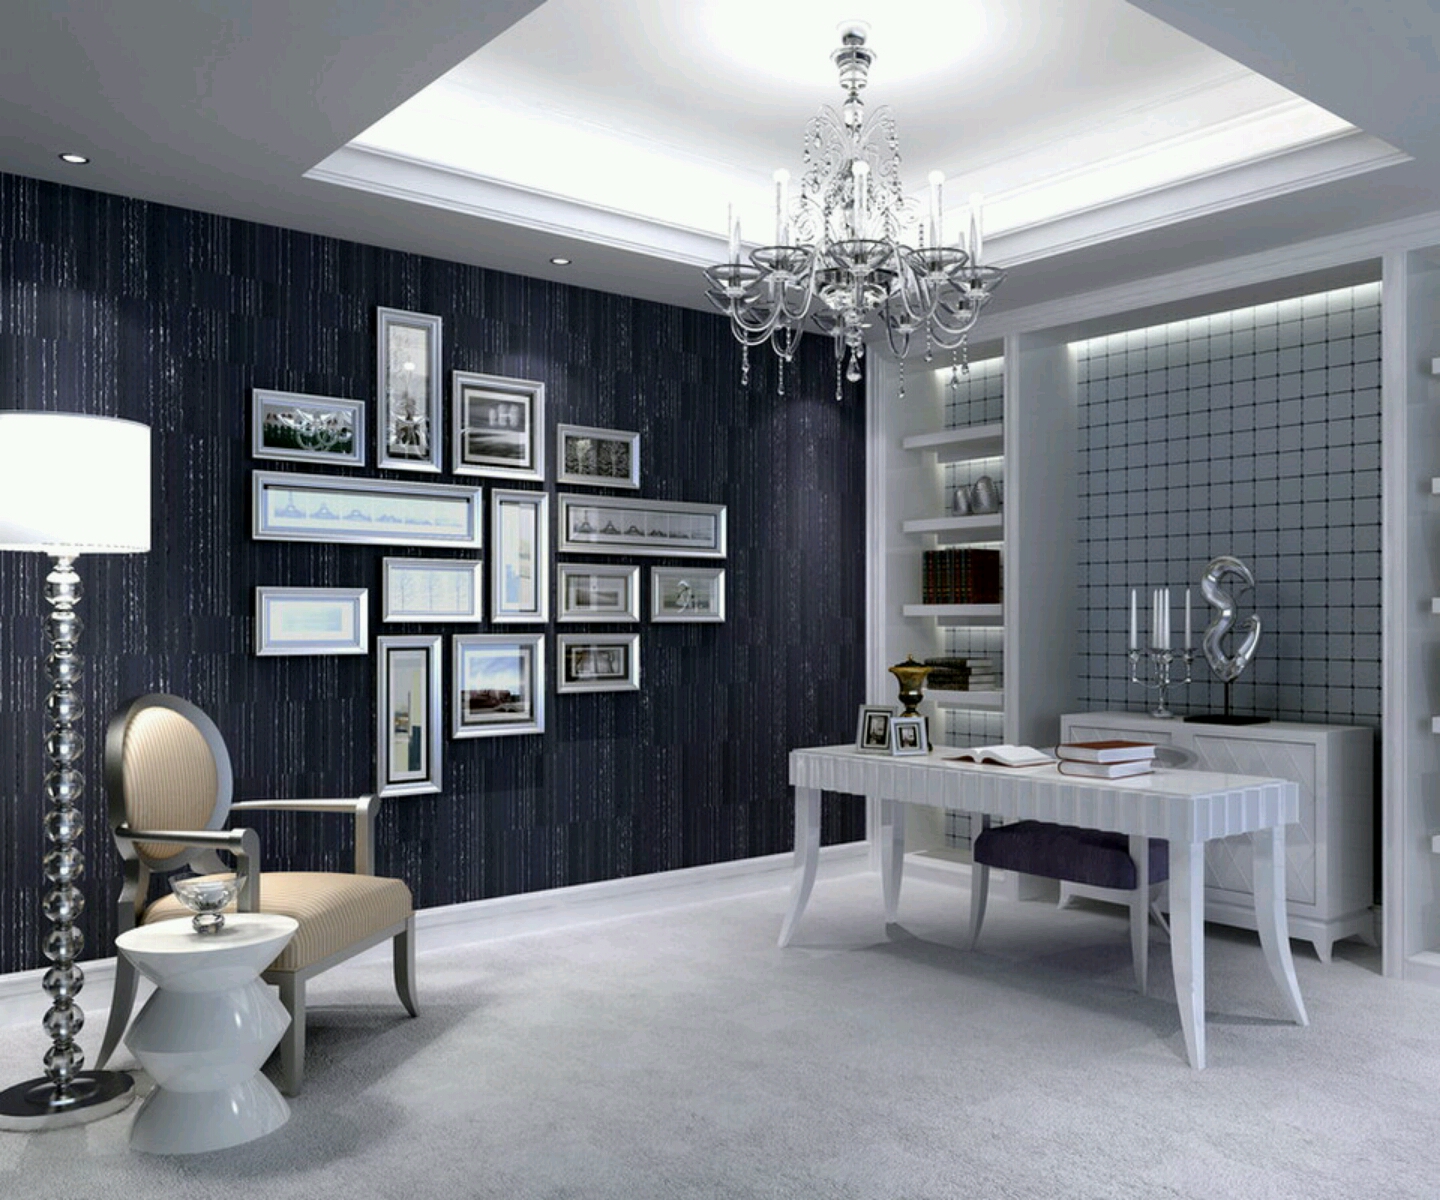 Modern homes studyrooms interior designs ideas.